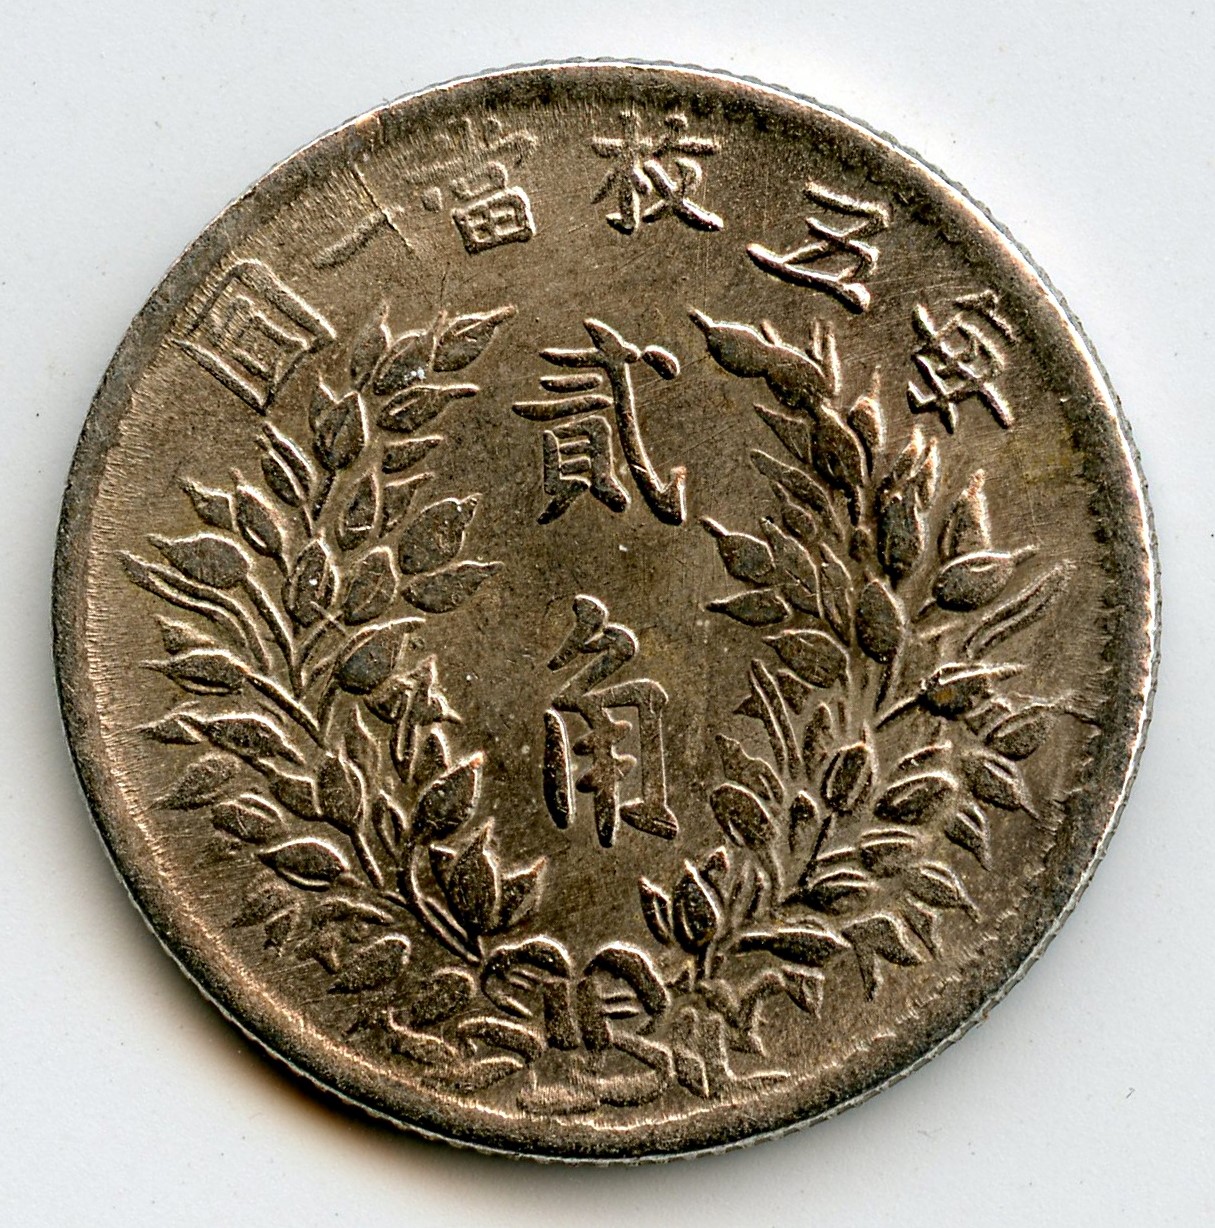 Chine 20 cents 1920 revers002.jpg